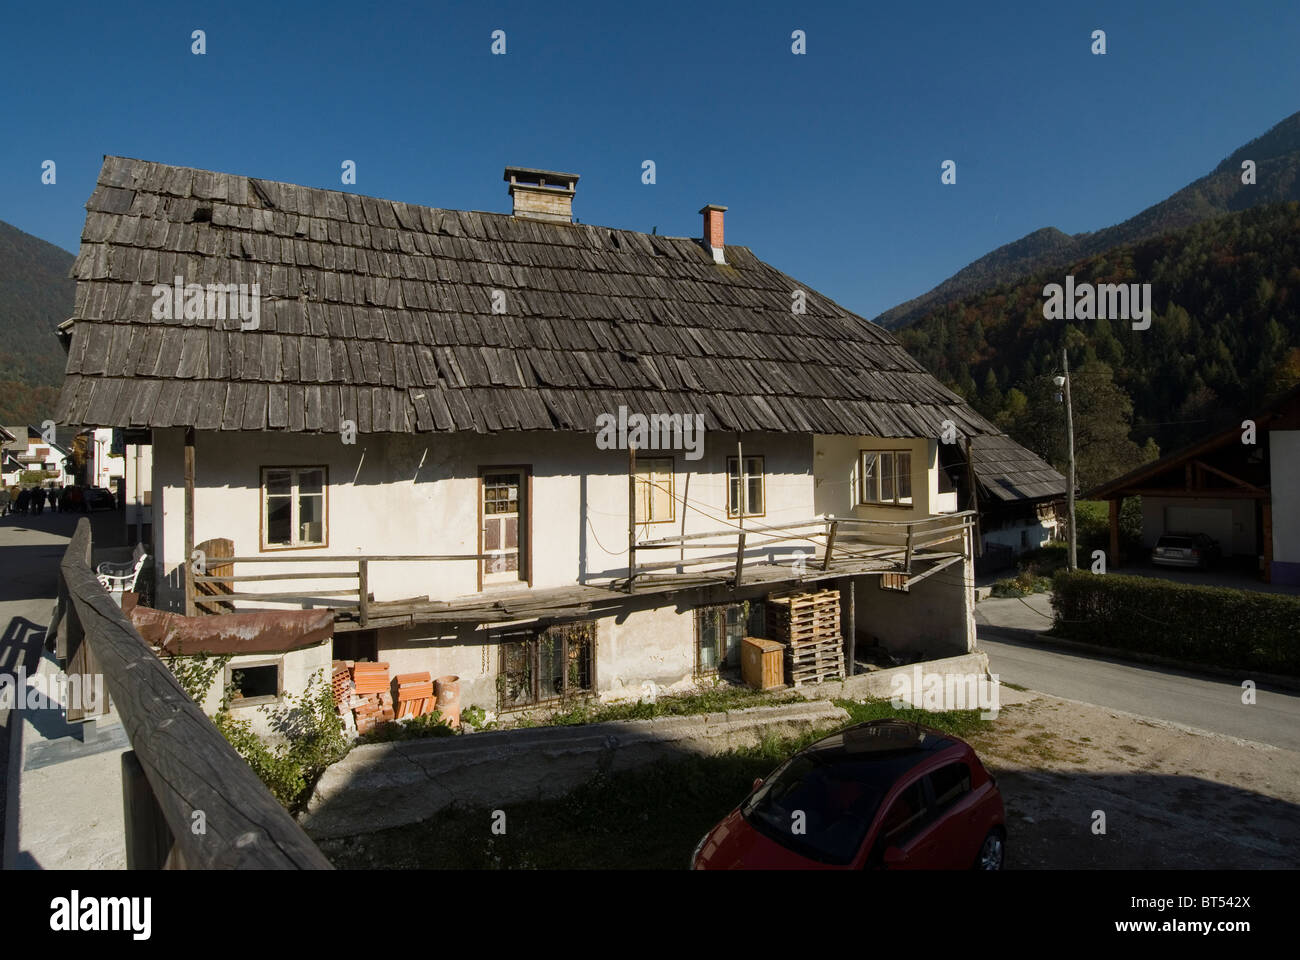 Slovenia House with a shingle roof Stock Photo